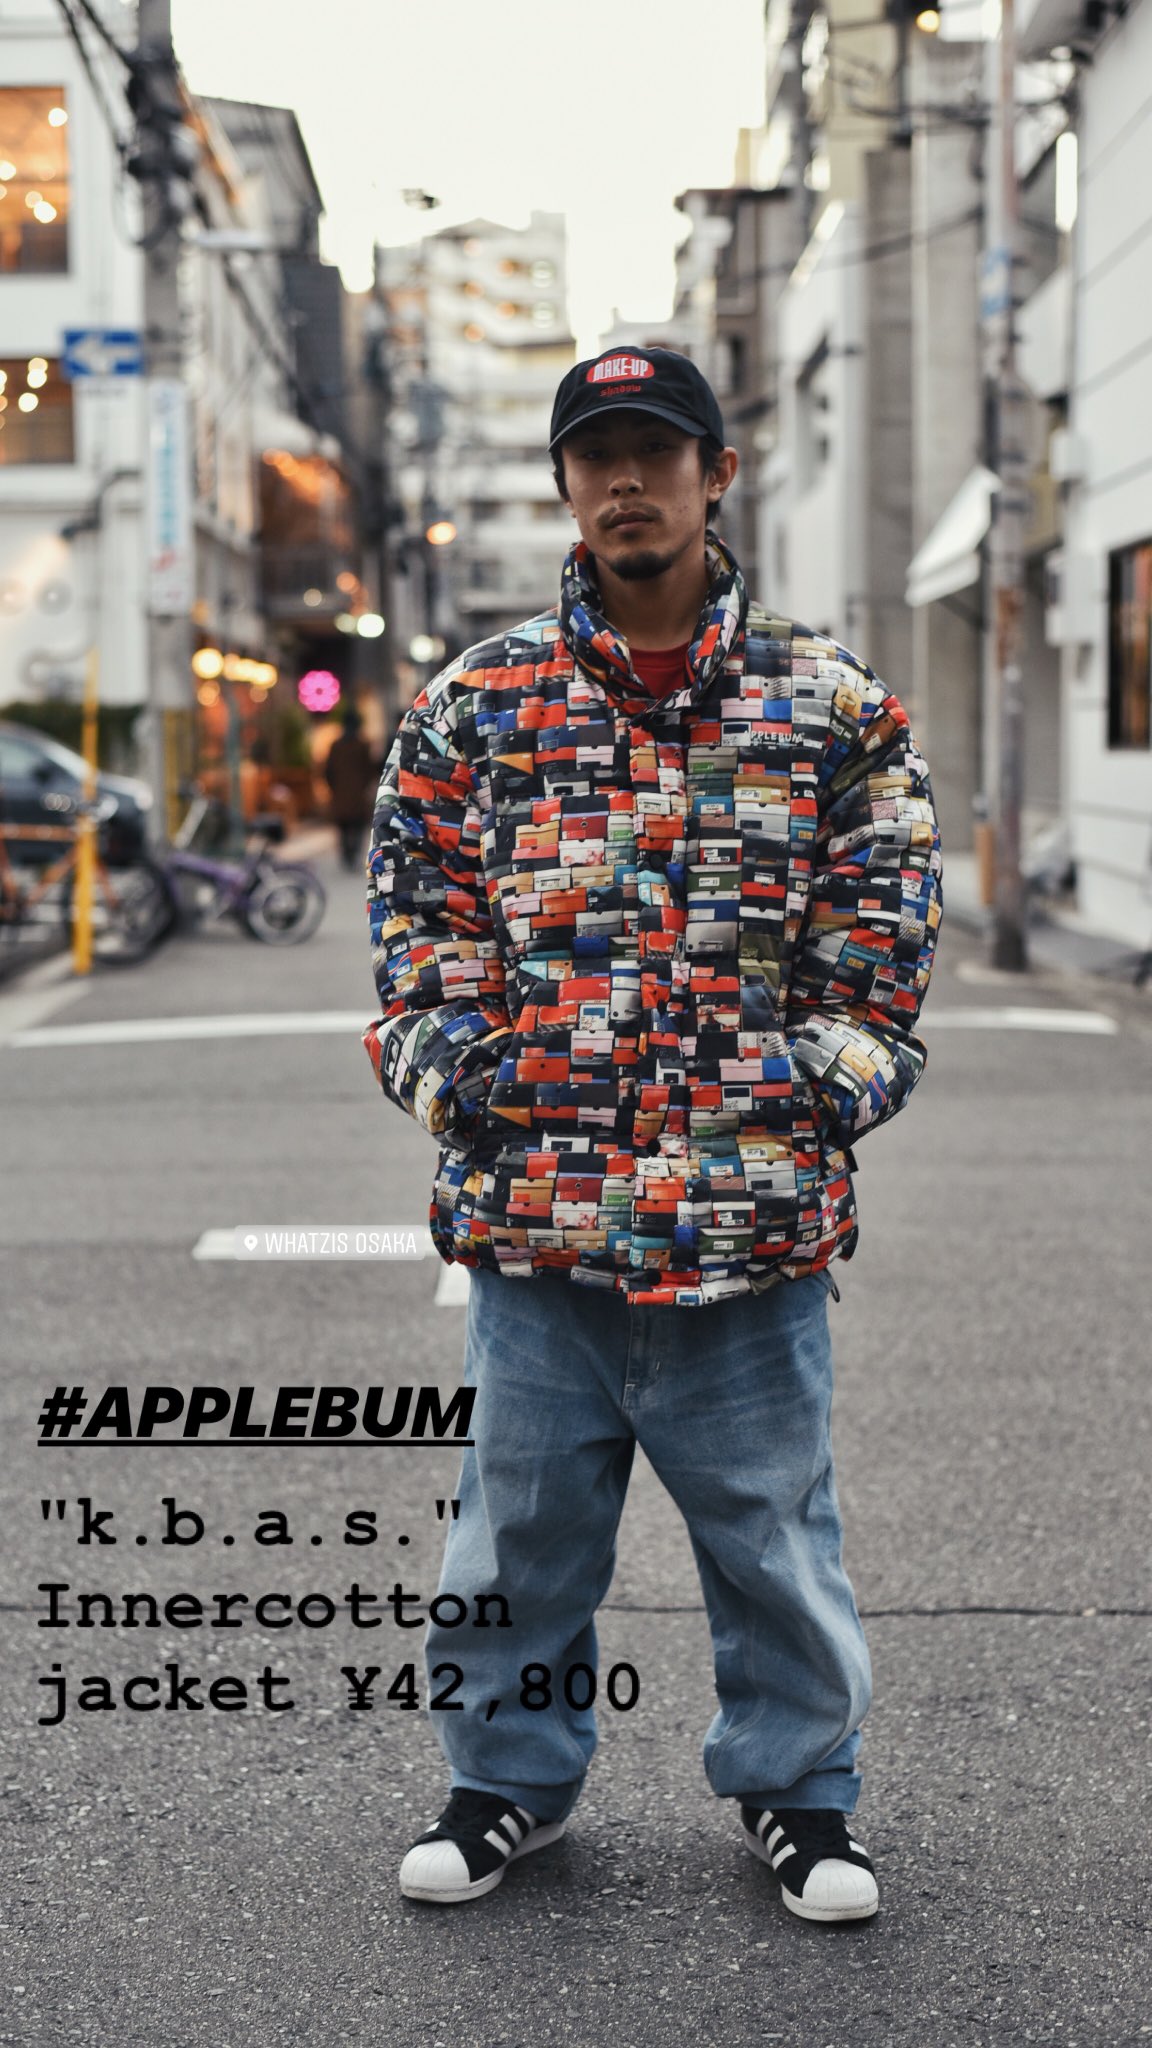 Applebum K.B.A.S.